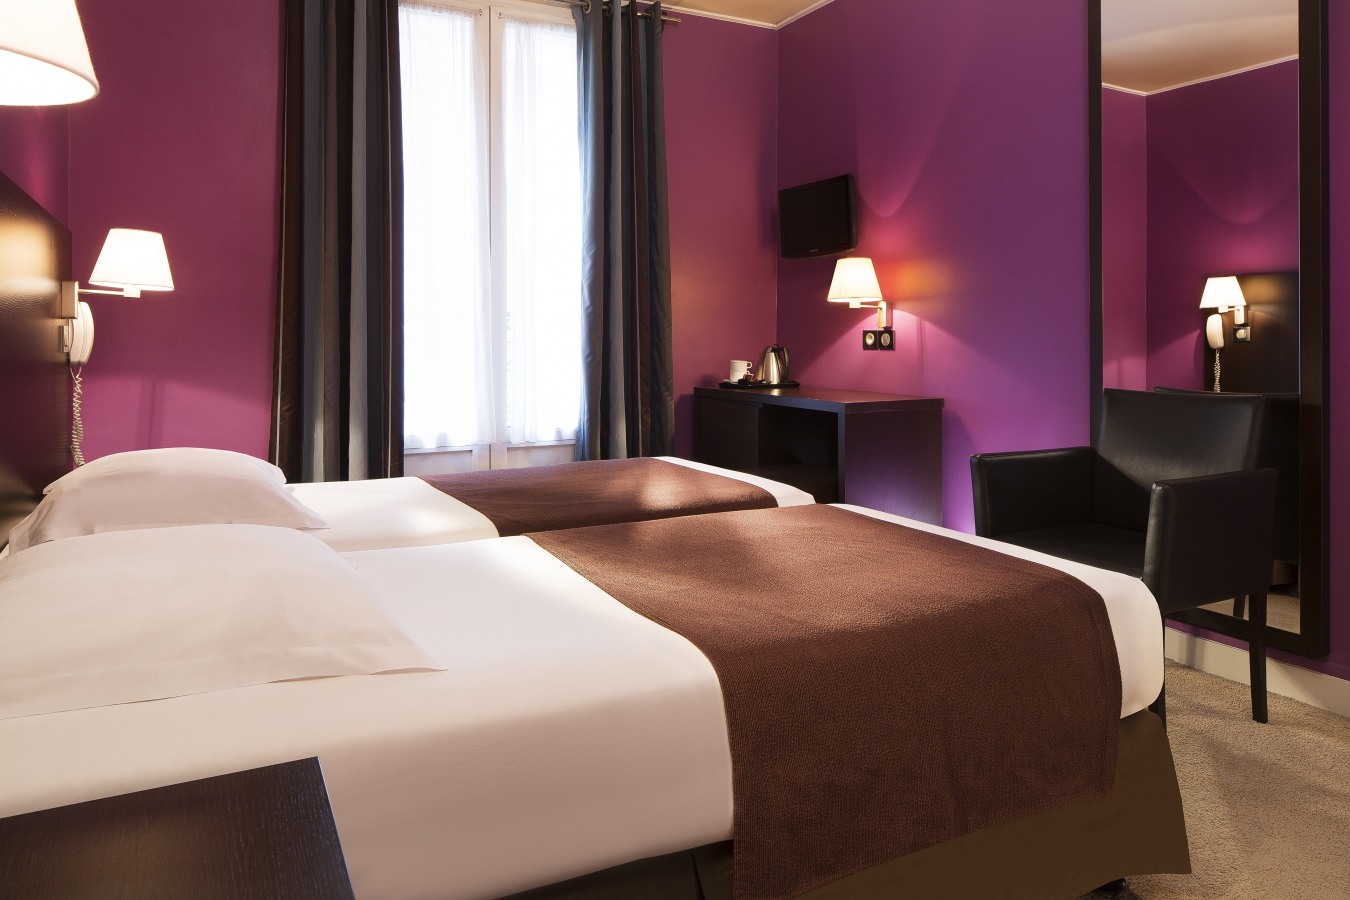 Hotel Sophie Germain - Exclusive Offers